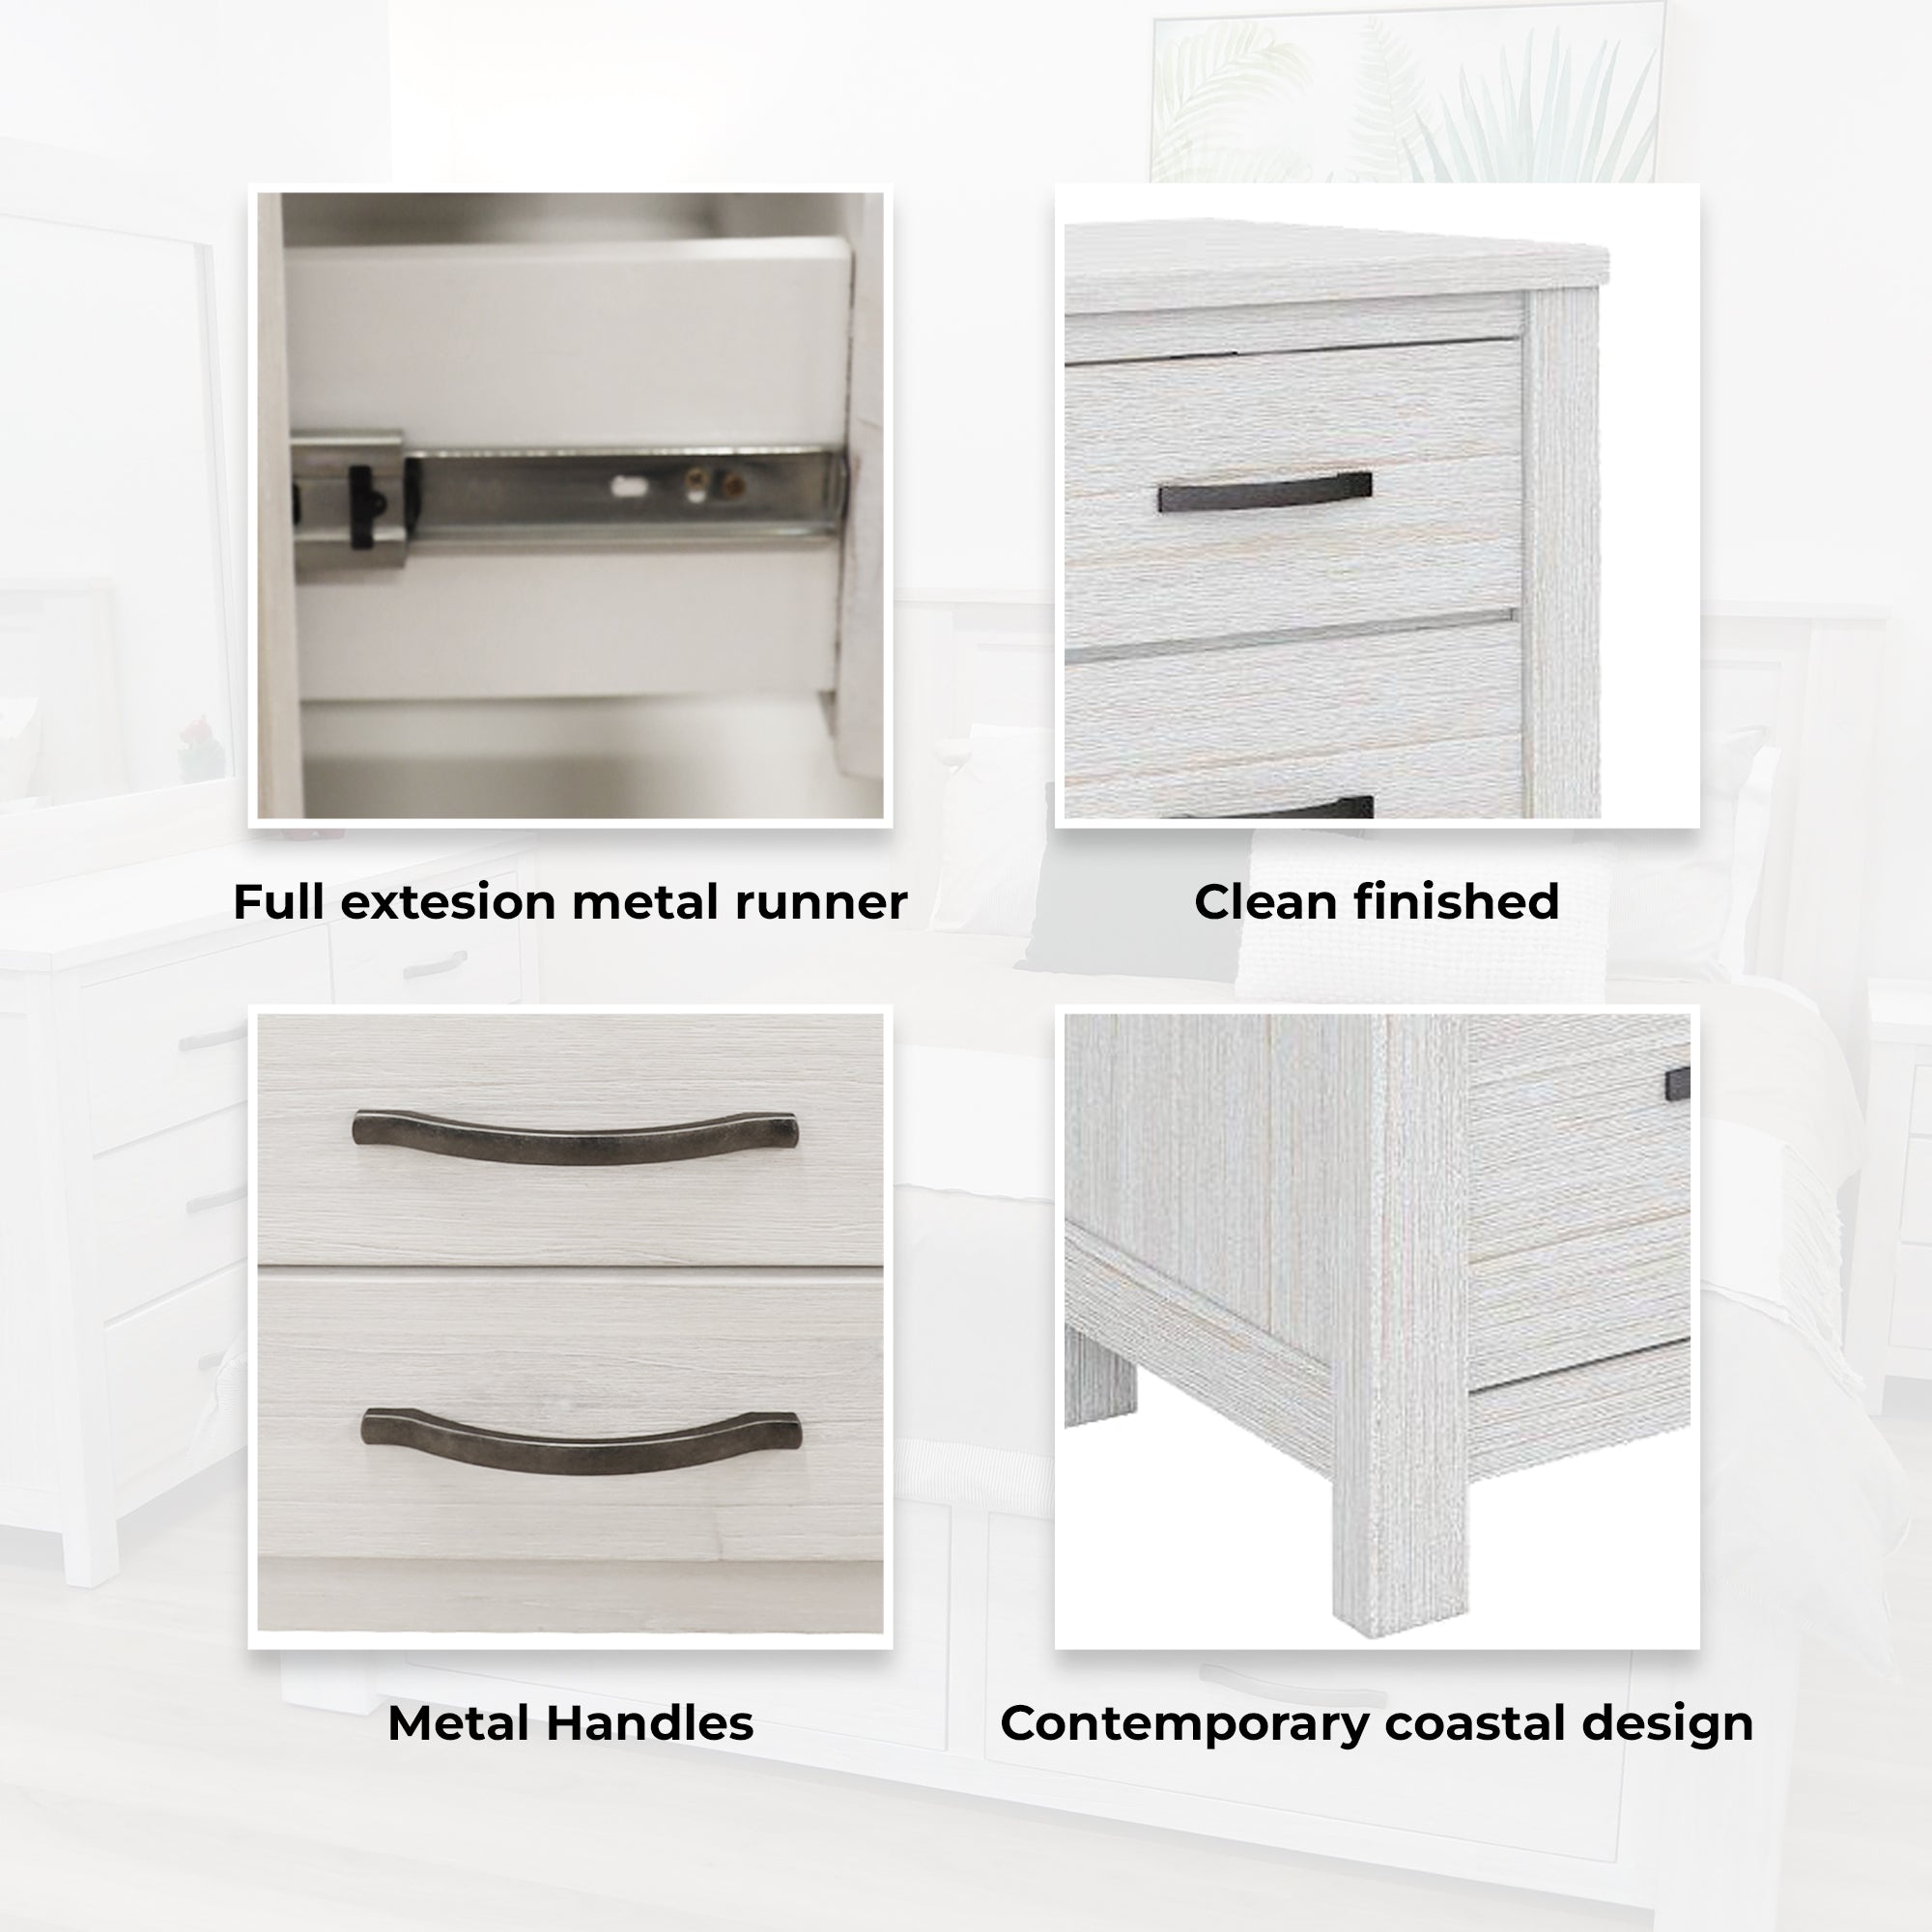 Dresser 6 Chest Of Drawers Solid Wood Tallboy Storage Cabinet - White